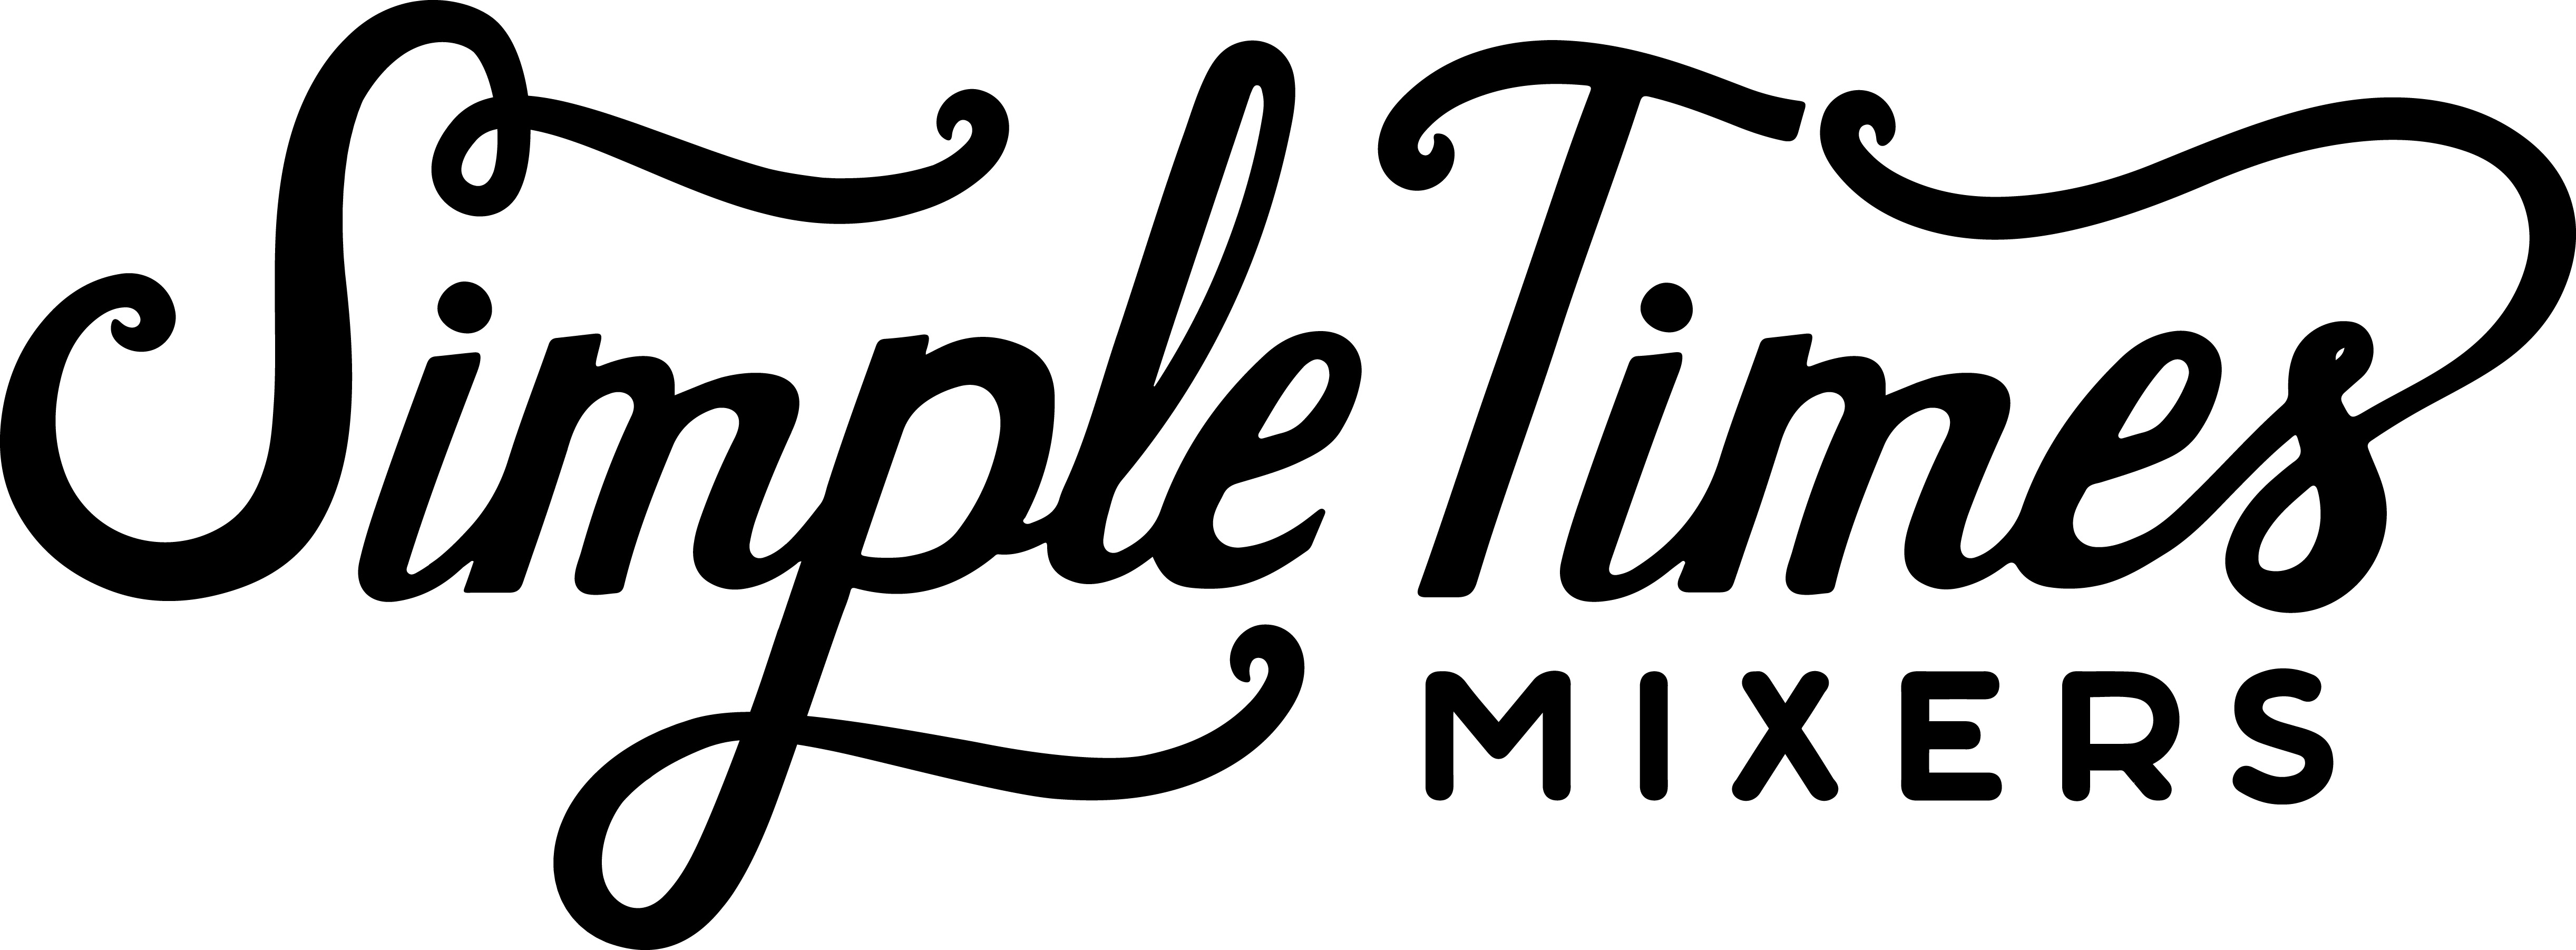 Simple mixed. Mixer logo. Mixing logo. Mix logo. ZR Mix logo.